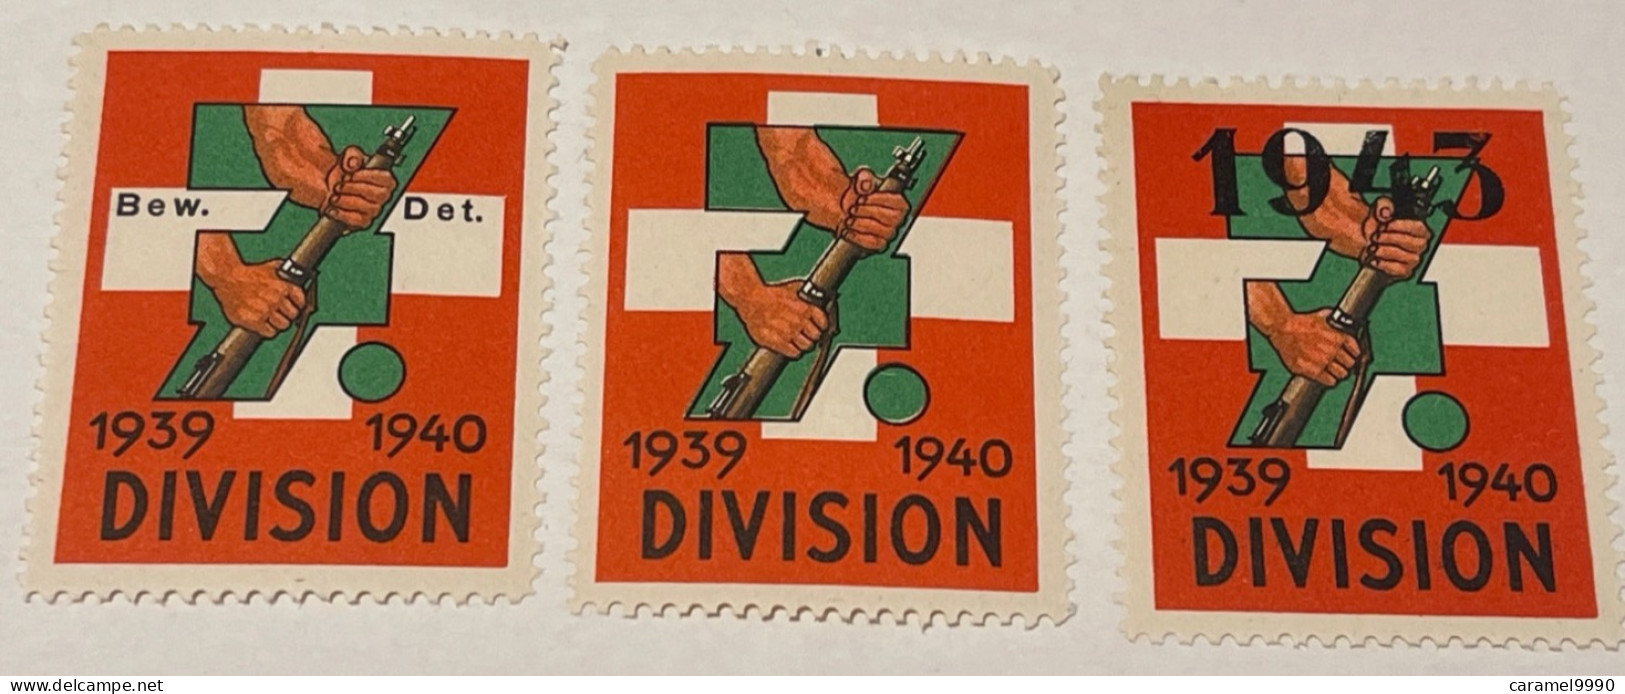 Schweiz Swiss Soldatenmarken 1939- 1940 Division Bew. Det. 1943 Z 26 - Labels